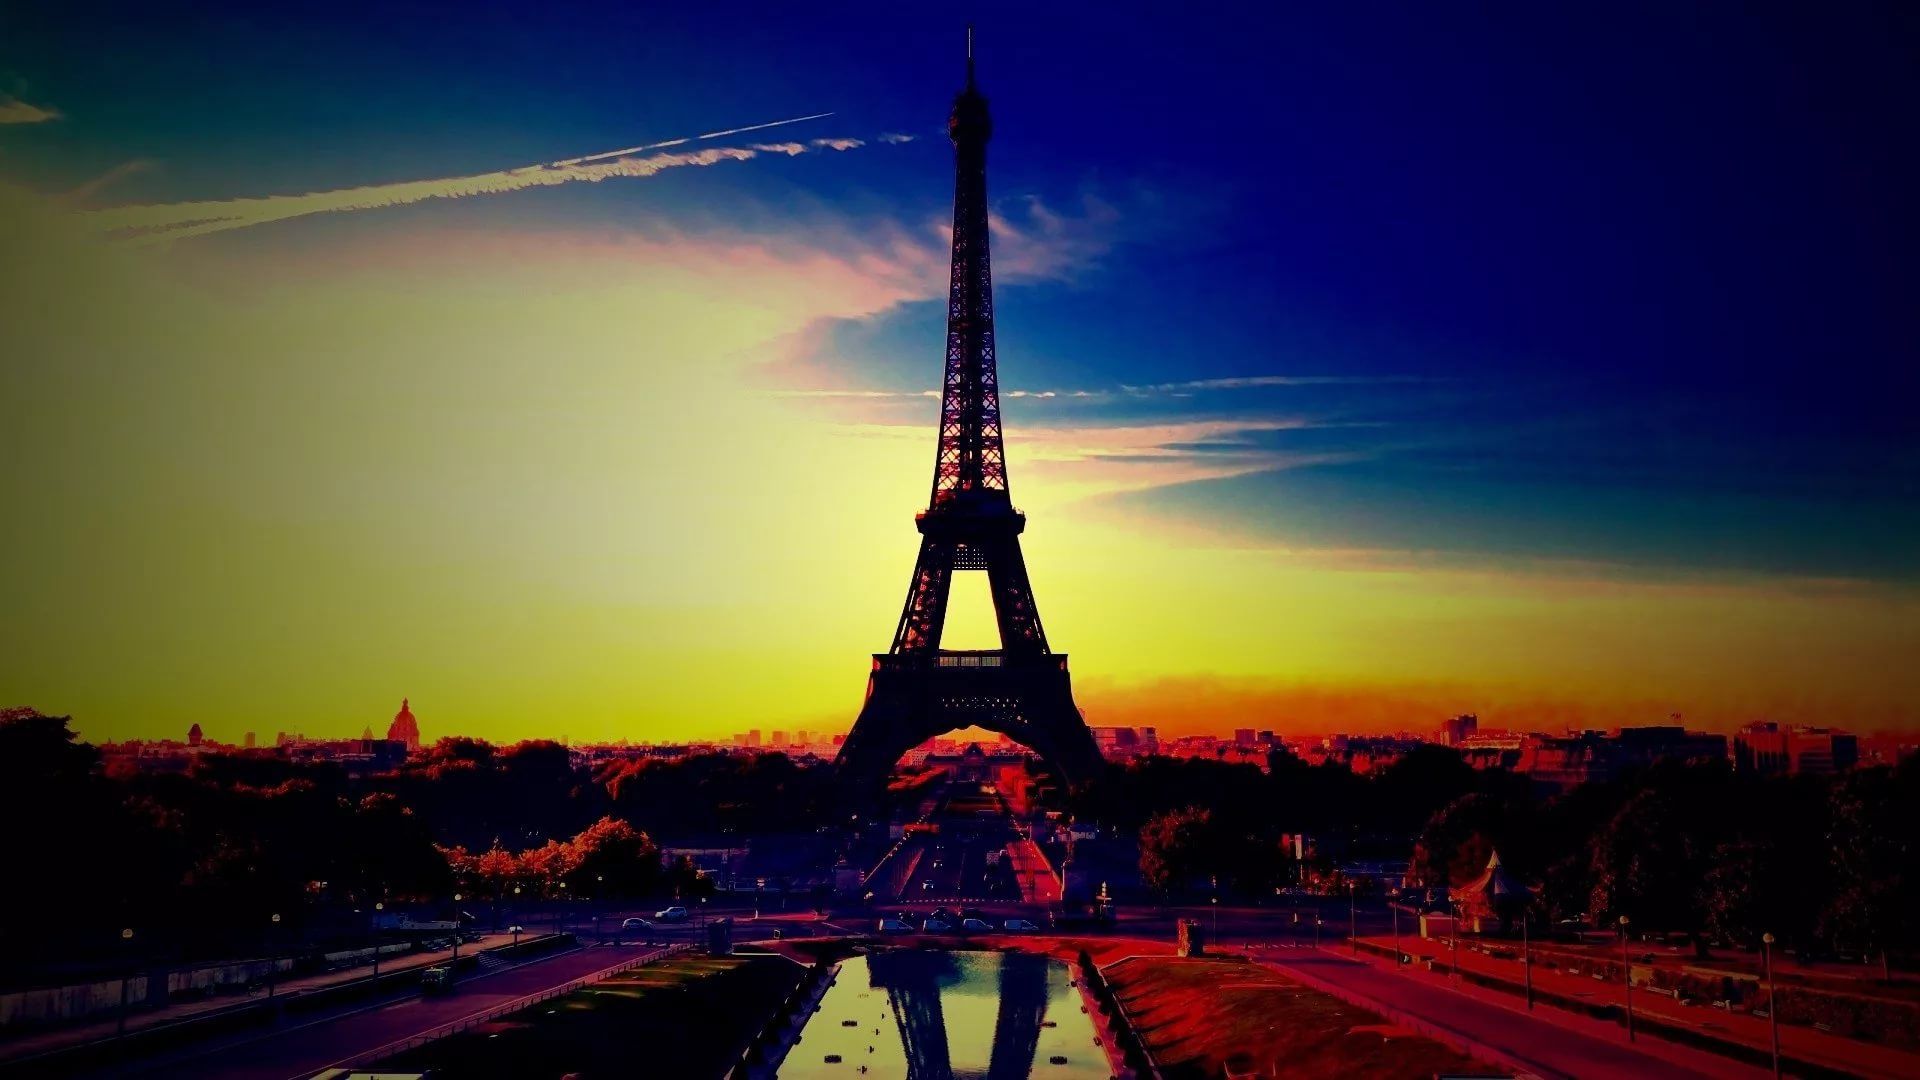 Cute Paris wallpaper image hd